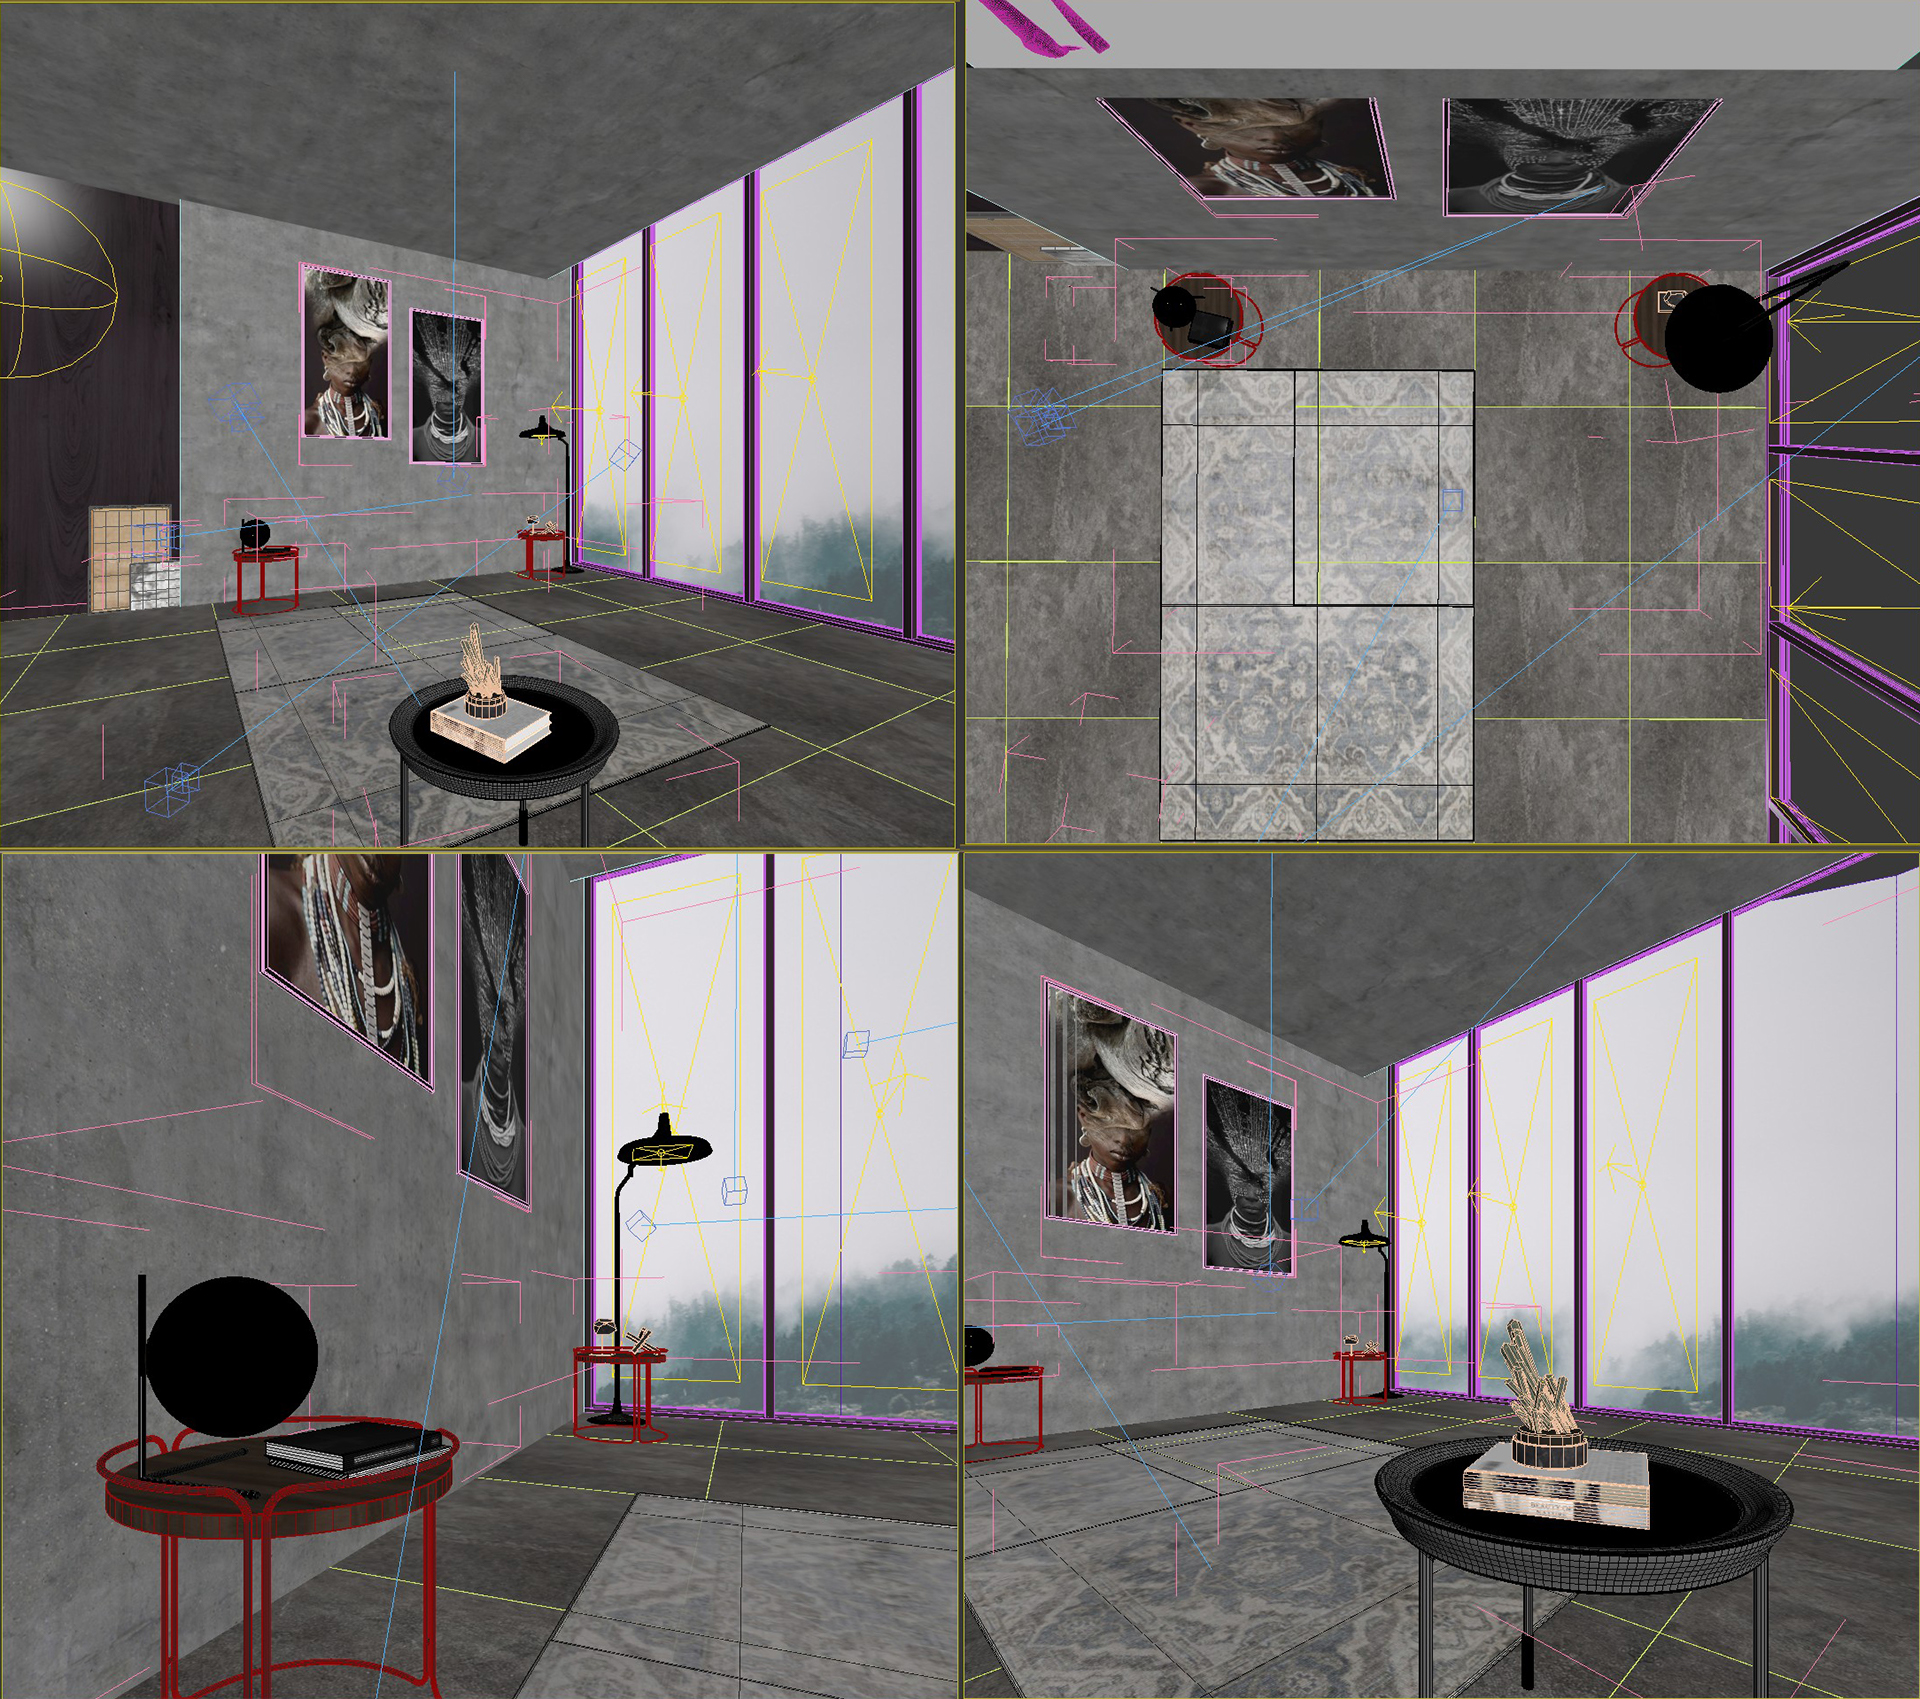 Free 3d Interior Scene On Behance